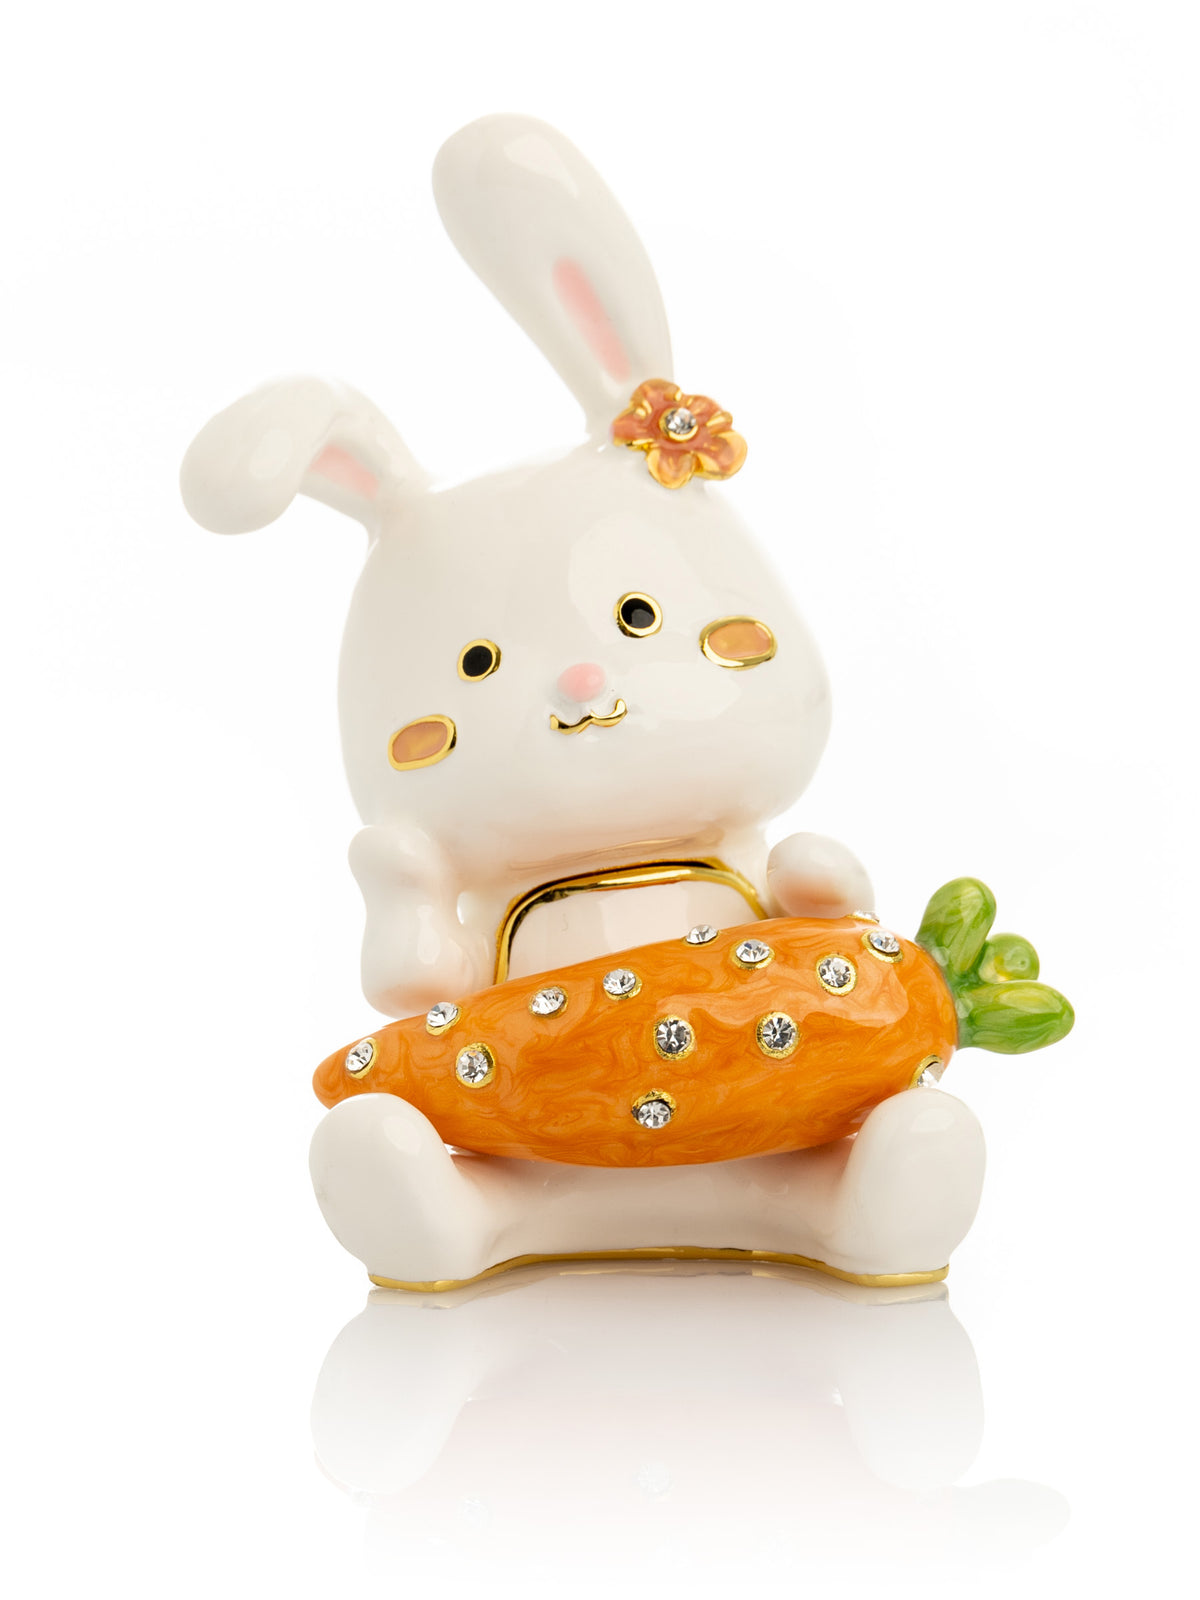 Bunny with Carrot Trinket Box